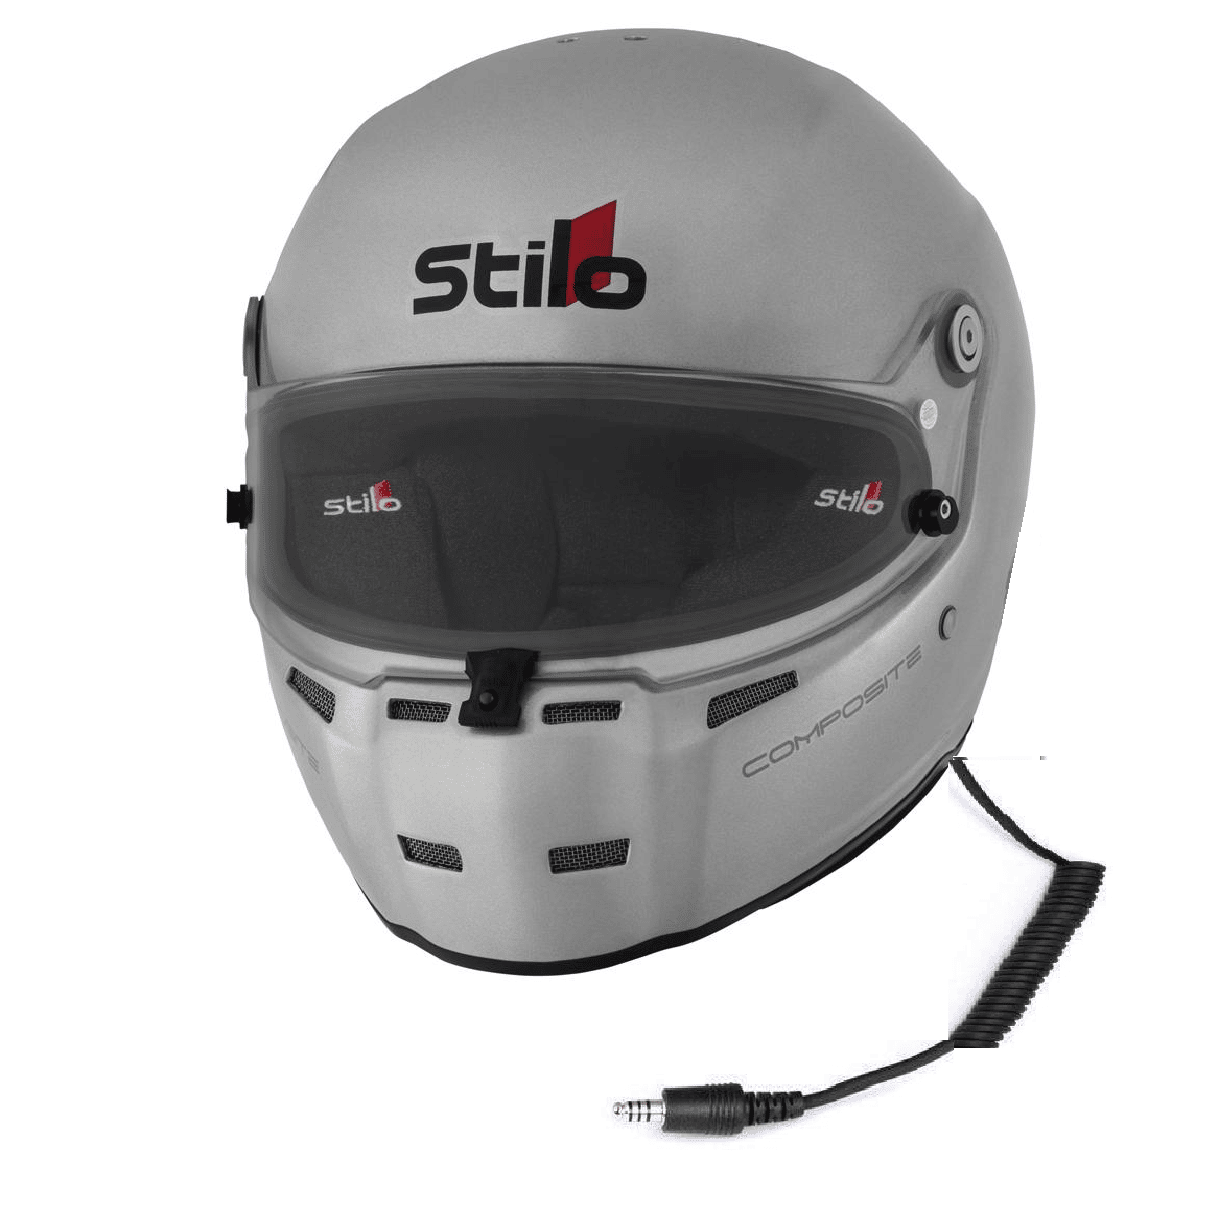 Stilo ST5 Harris Comms Circut helmet composite